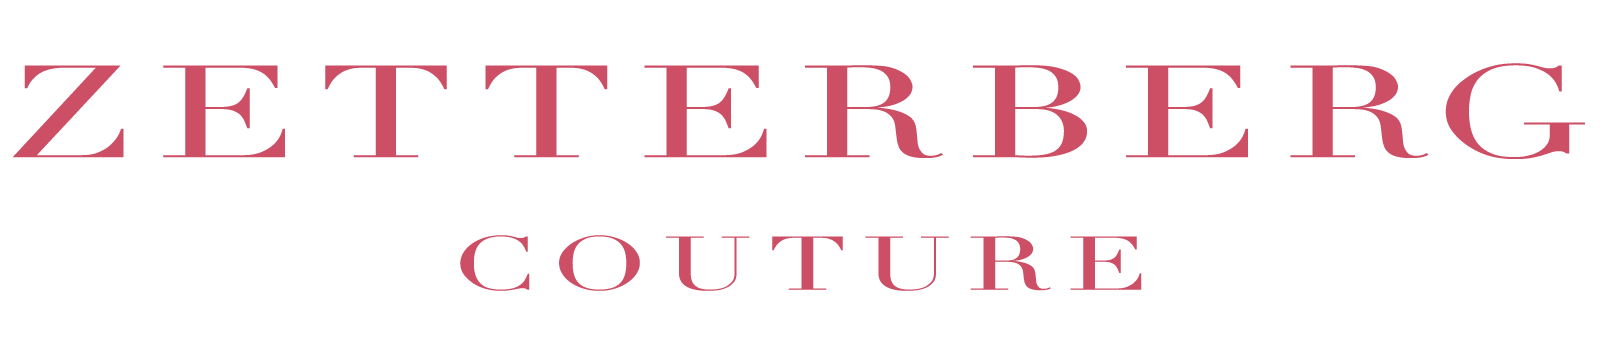 Zetterberg Couture